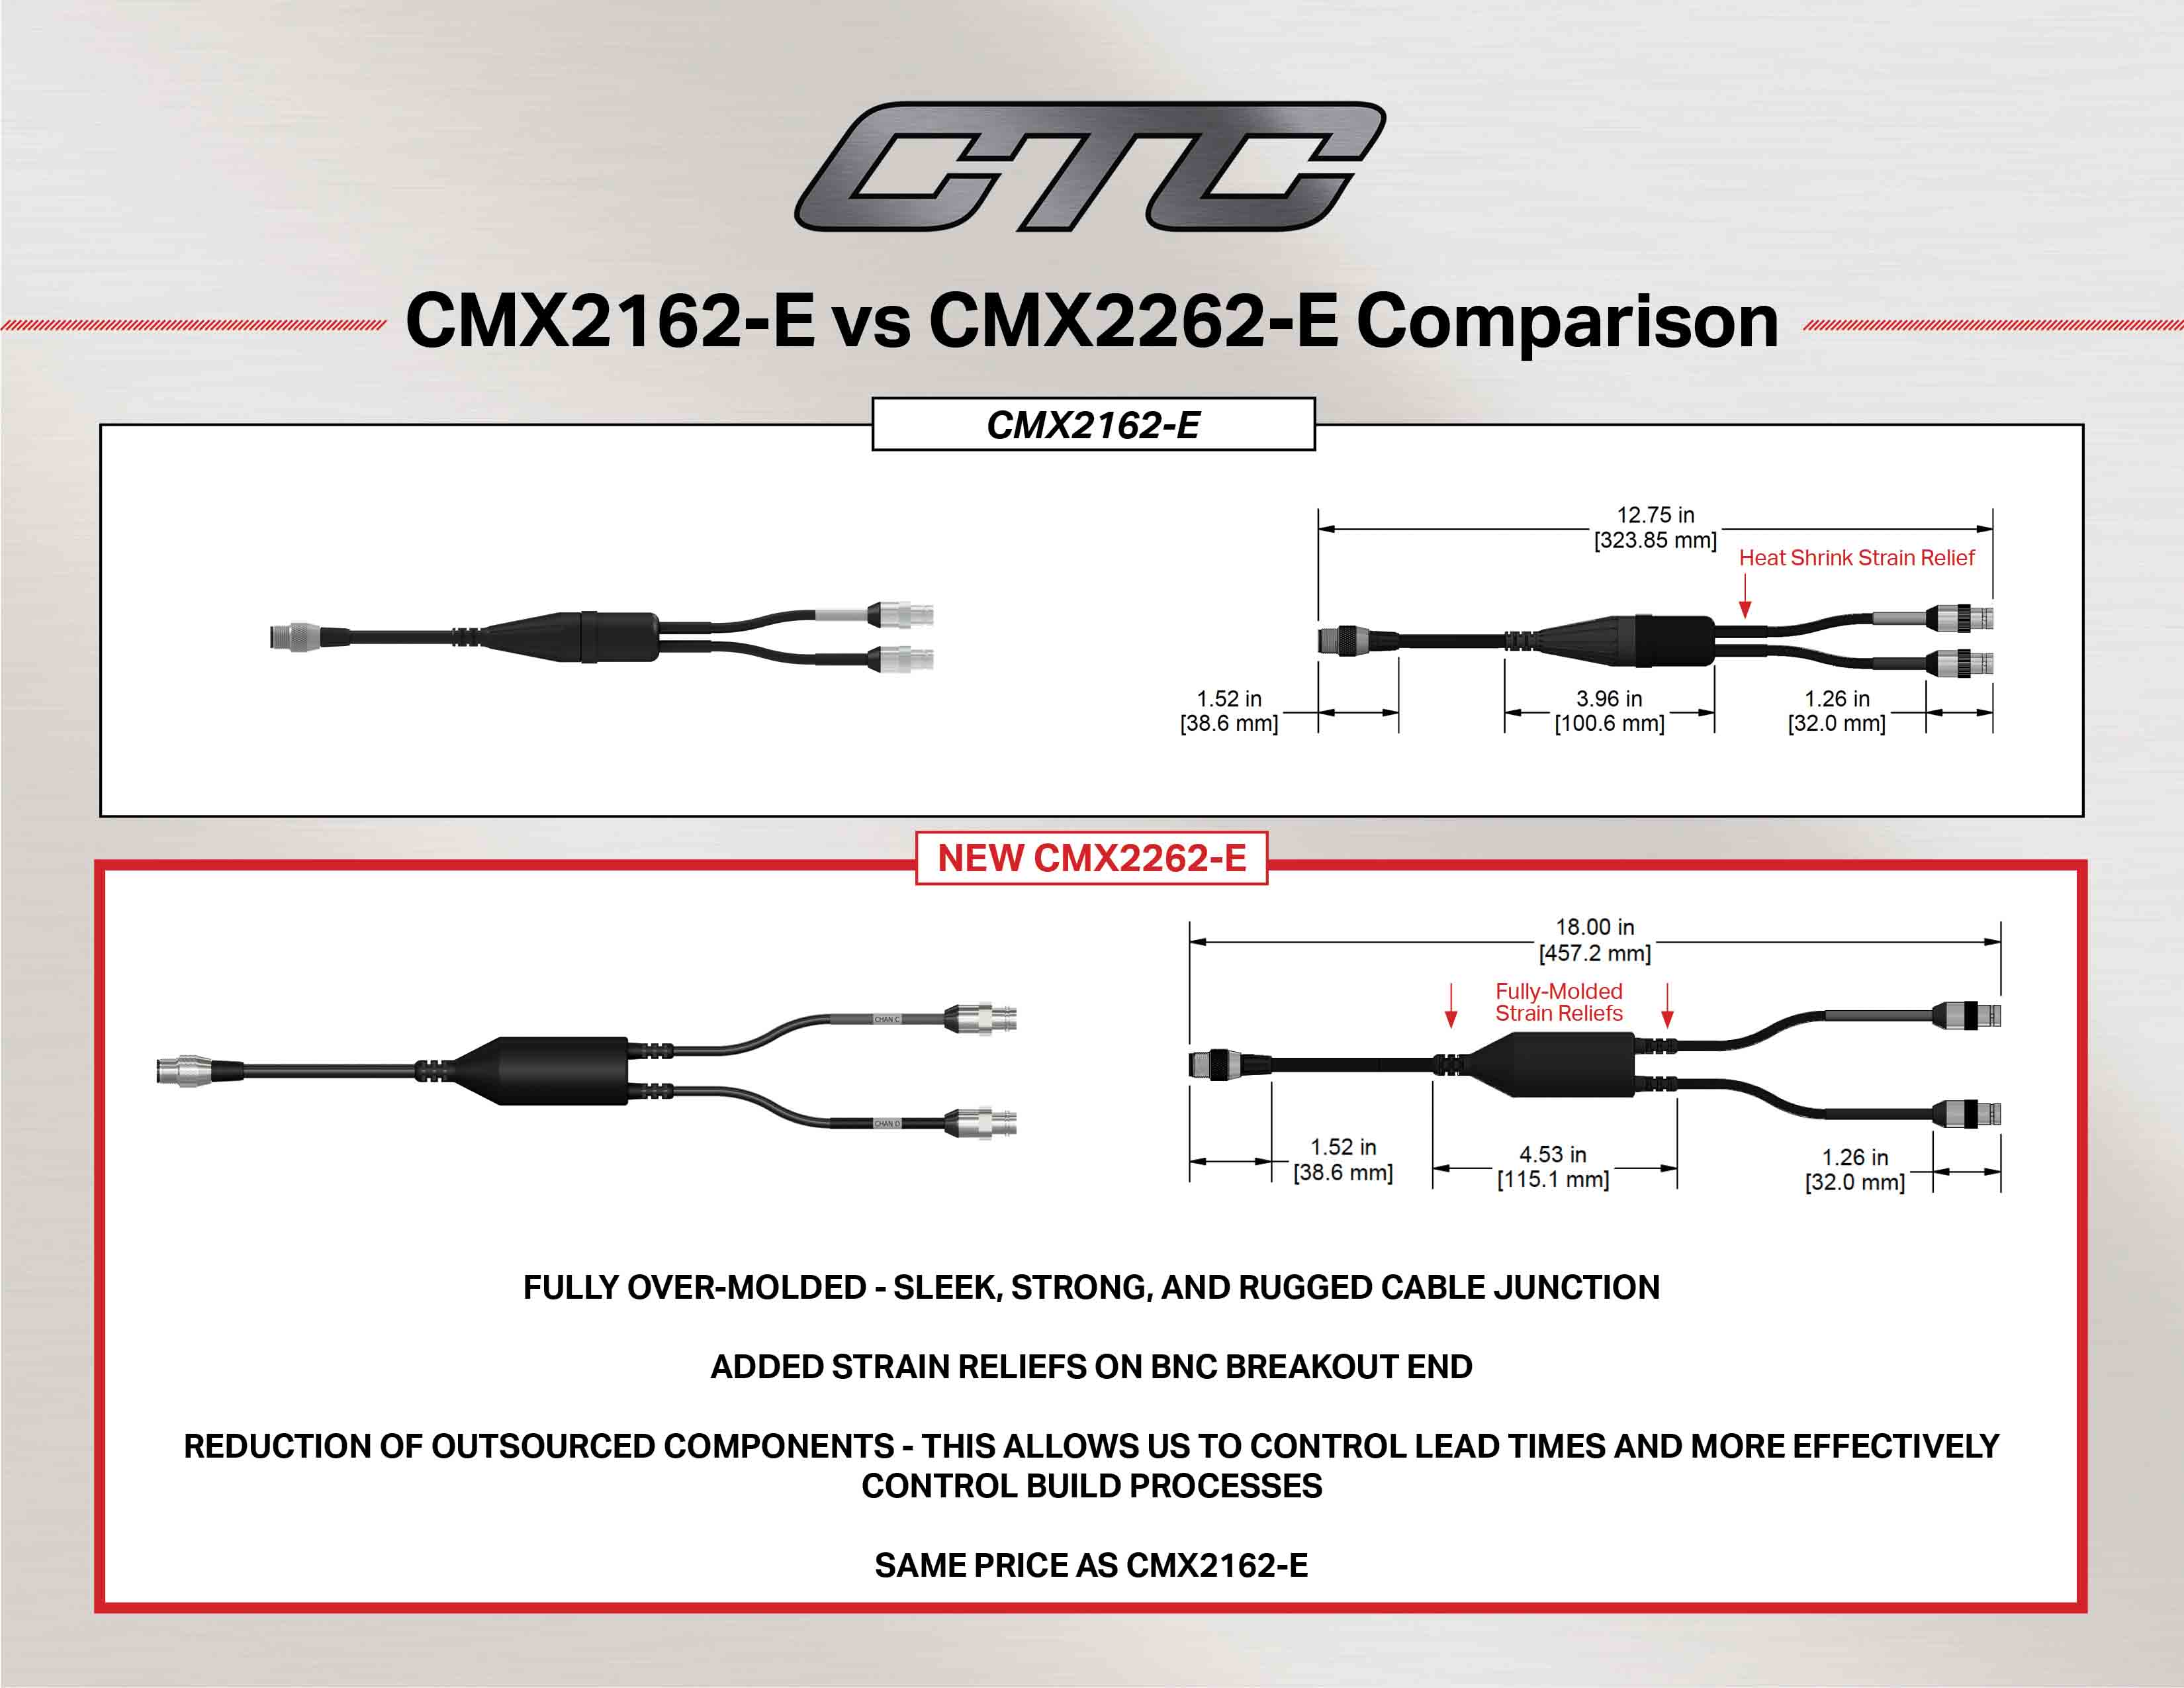 CMX2162-E vs CMX2262-E cable comparison diagram and measurements